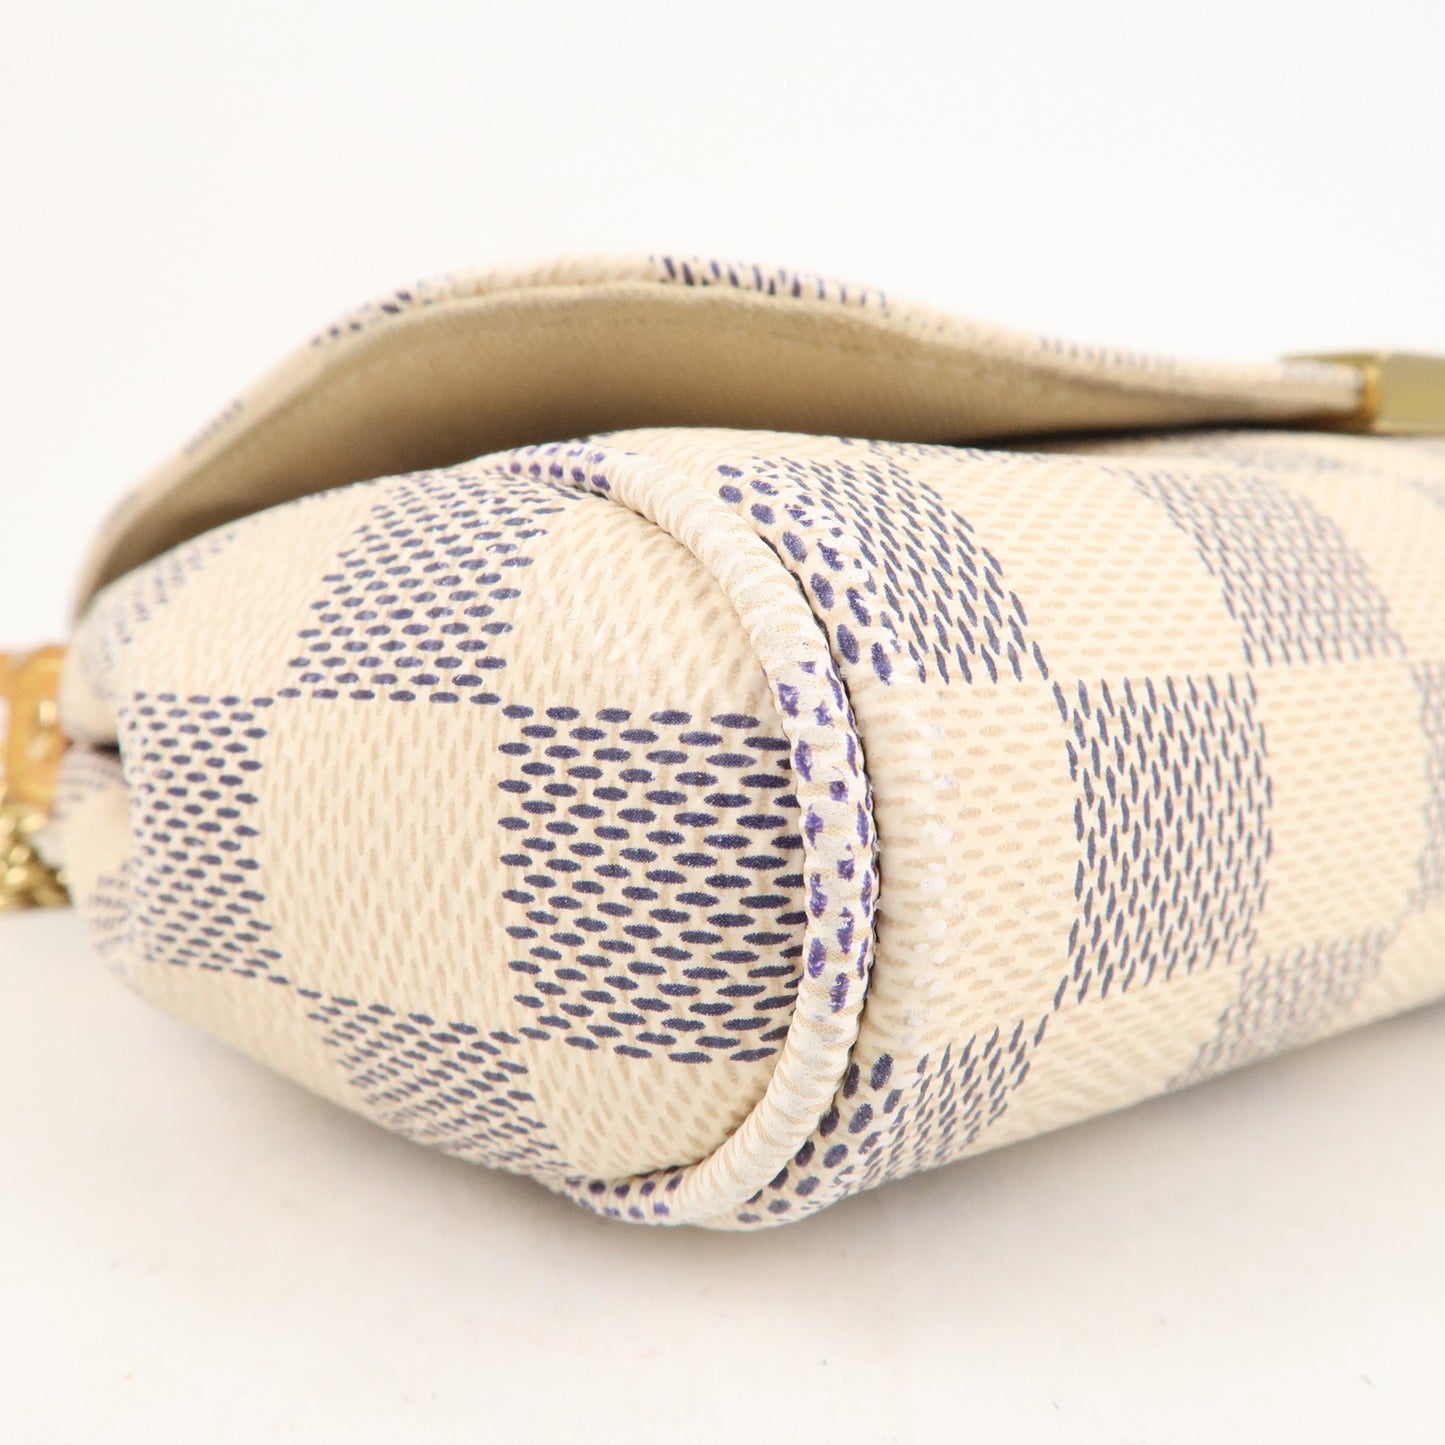 Louis-Vuitton-Damier-Azur-Favorite-MM-2Way-Shoulder-Bag-N41275